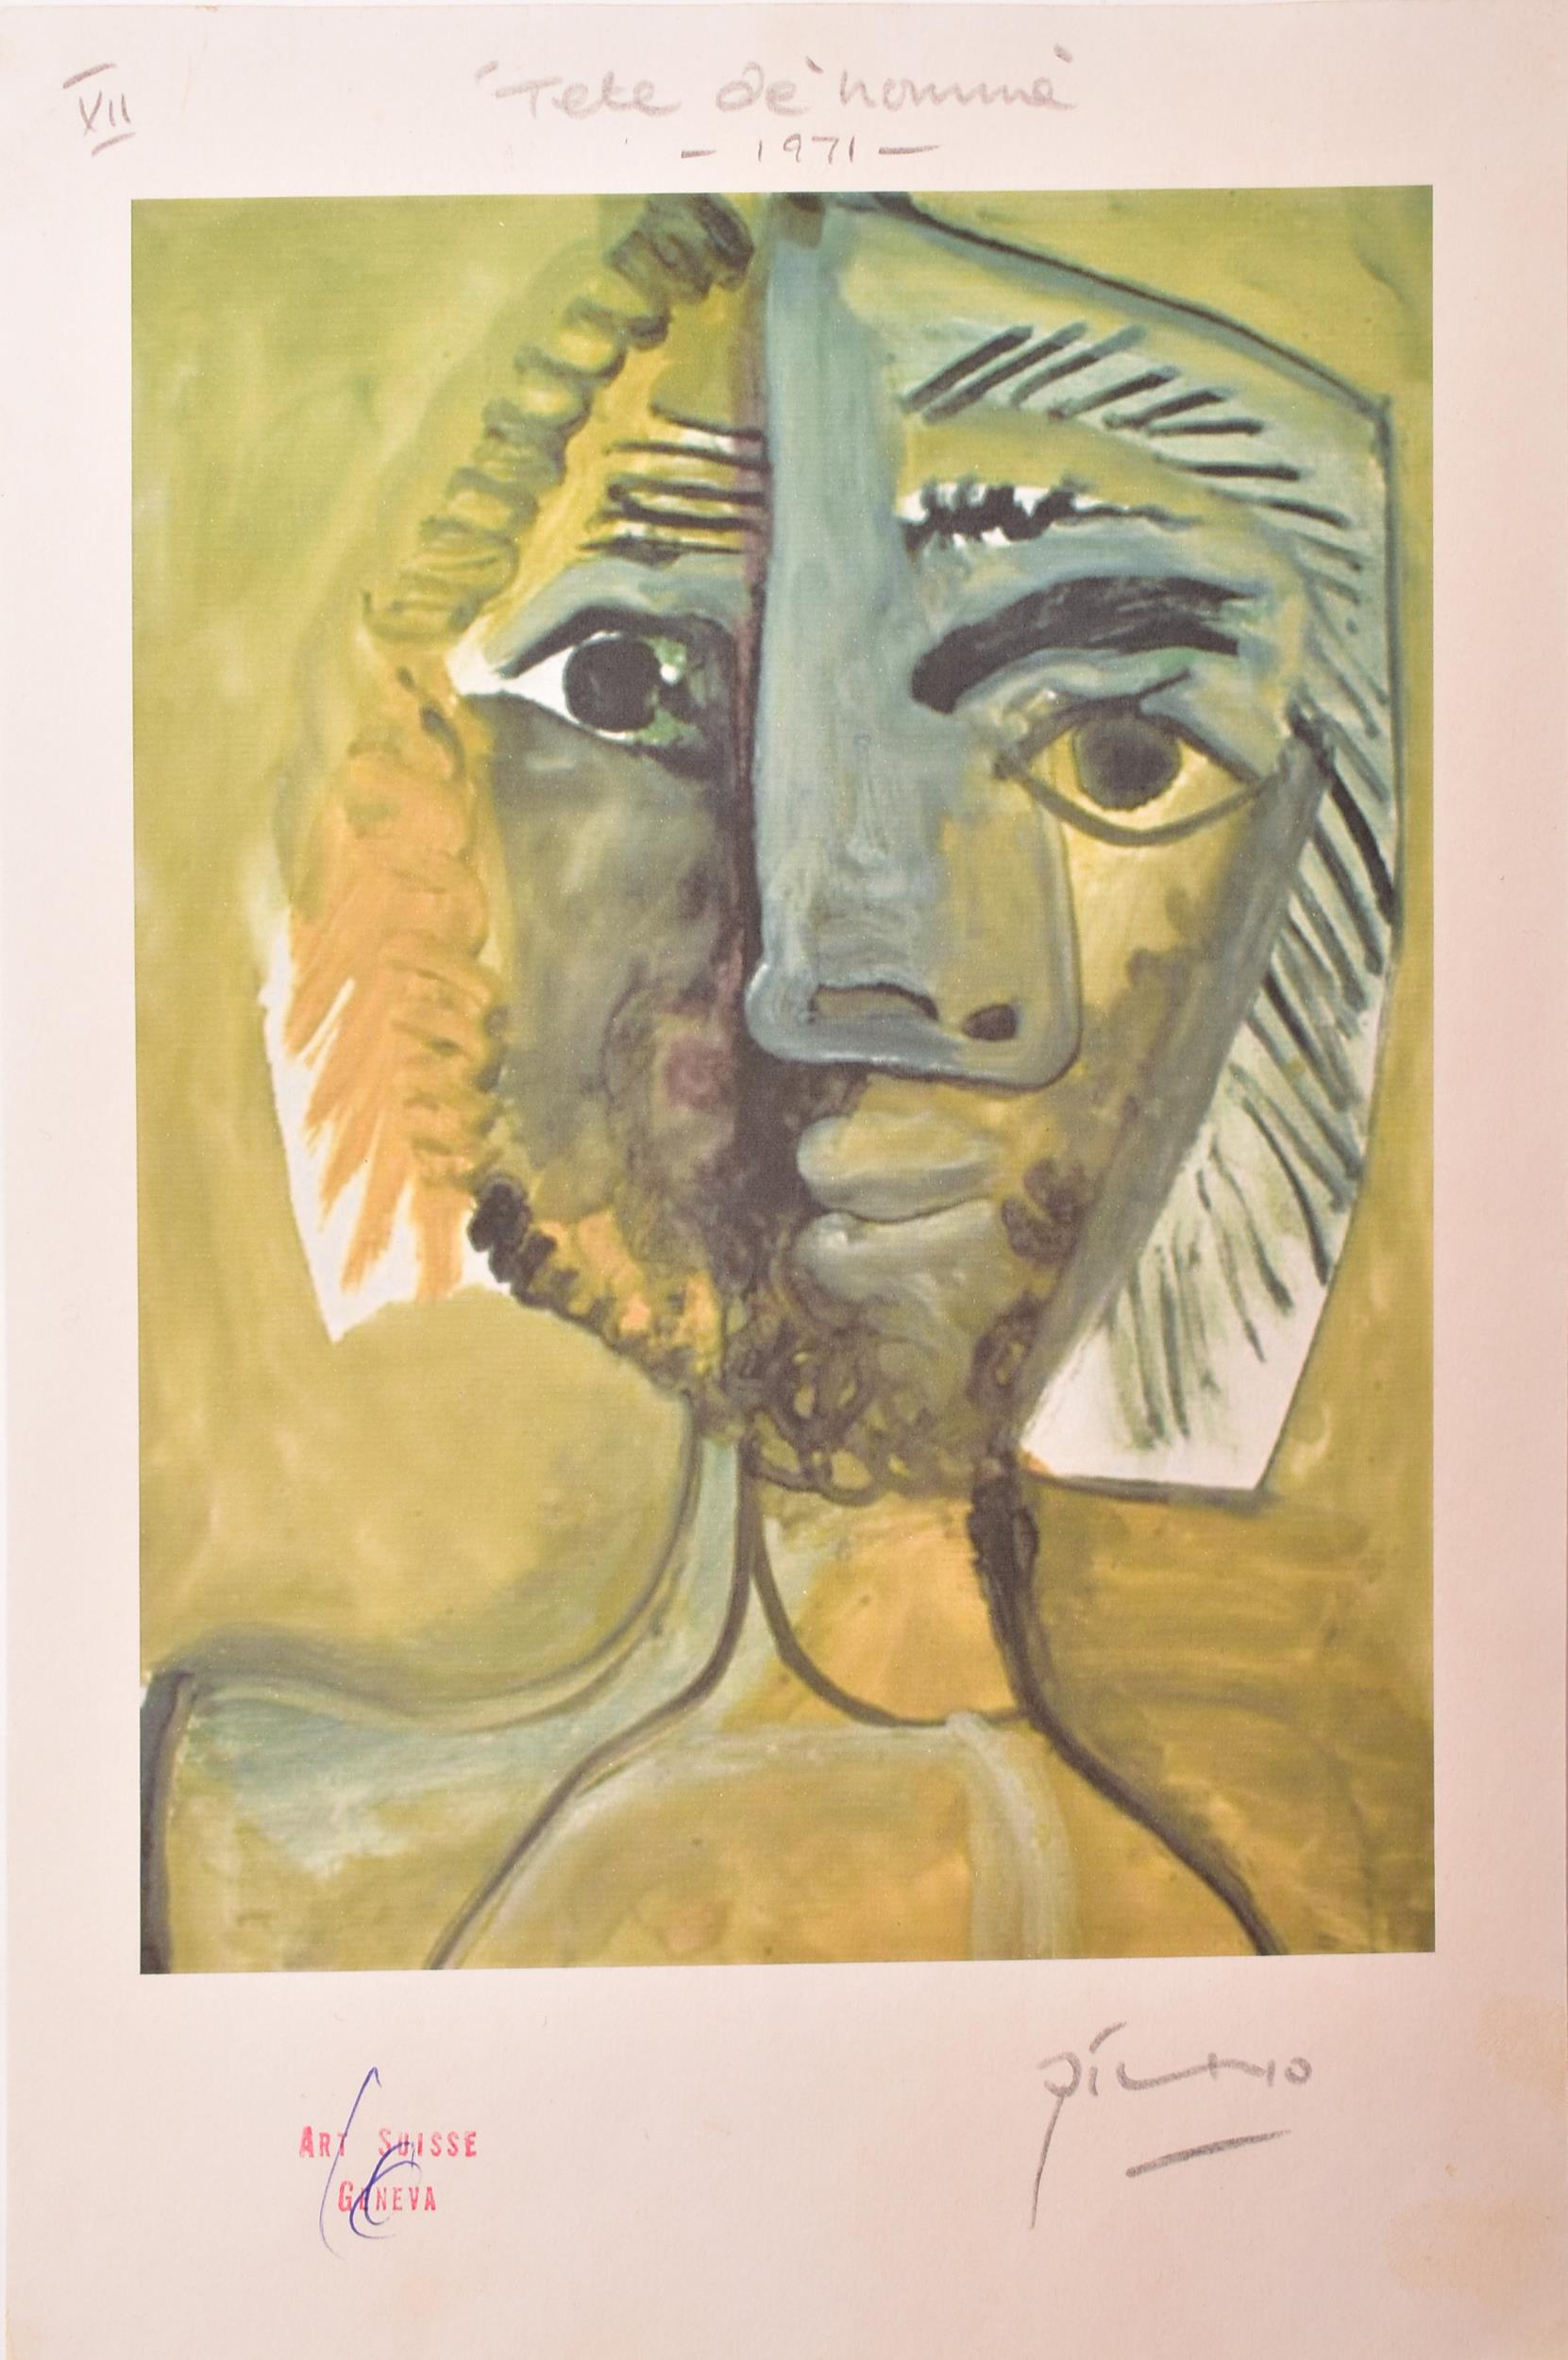 PABLO PICASSO (1881 - 1973) - TETE D'HOMME - 1971 - Image 2 of 5